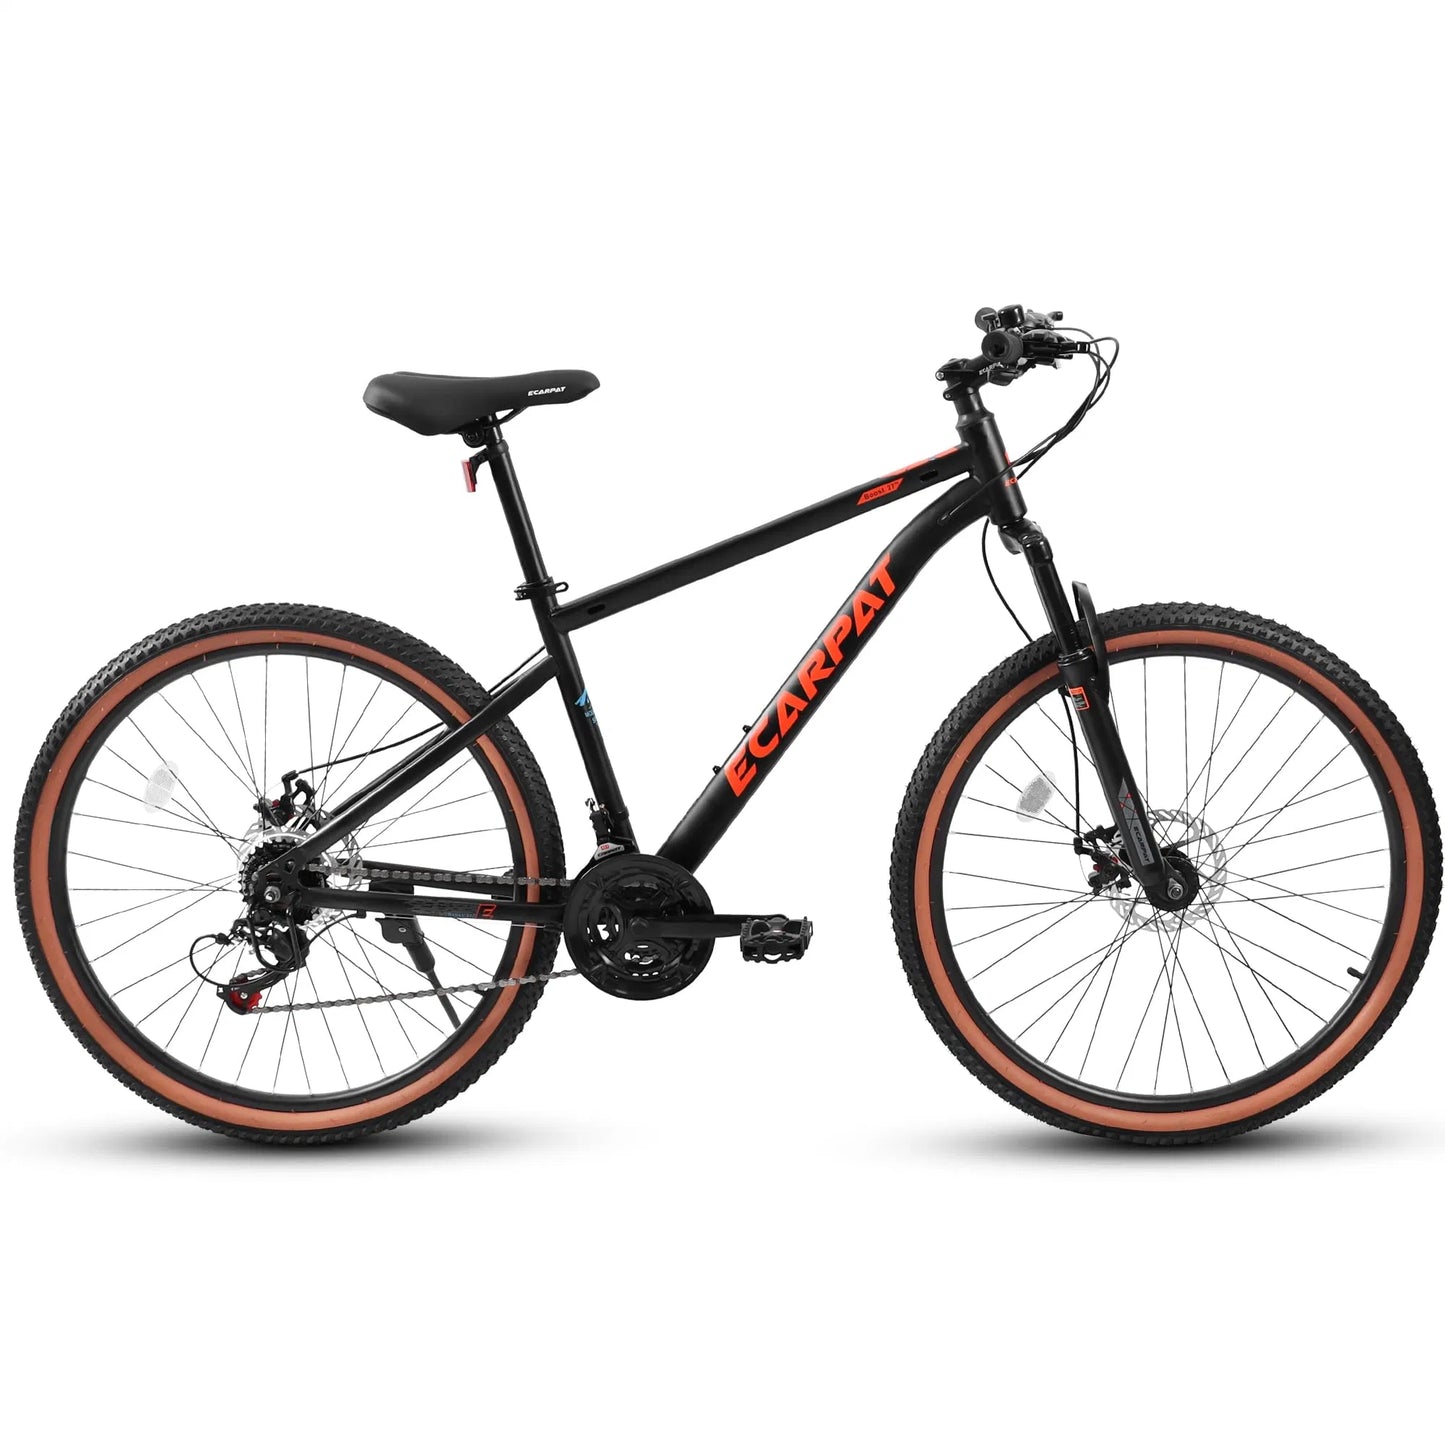 Ecarpat Mountain Bike Carbon Steel Frame 27.5 Inch Wheel, 21-Speed Disc Brakes Trigger Shifter Black/Red